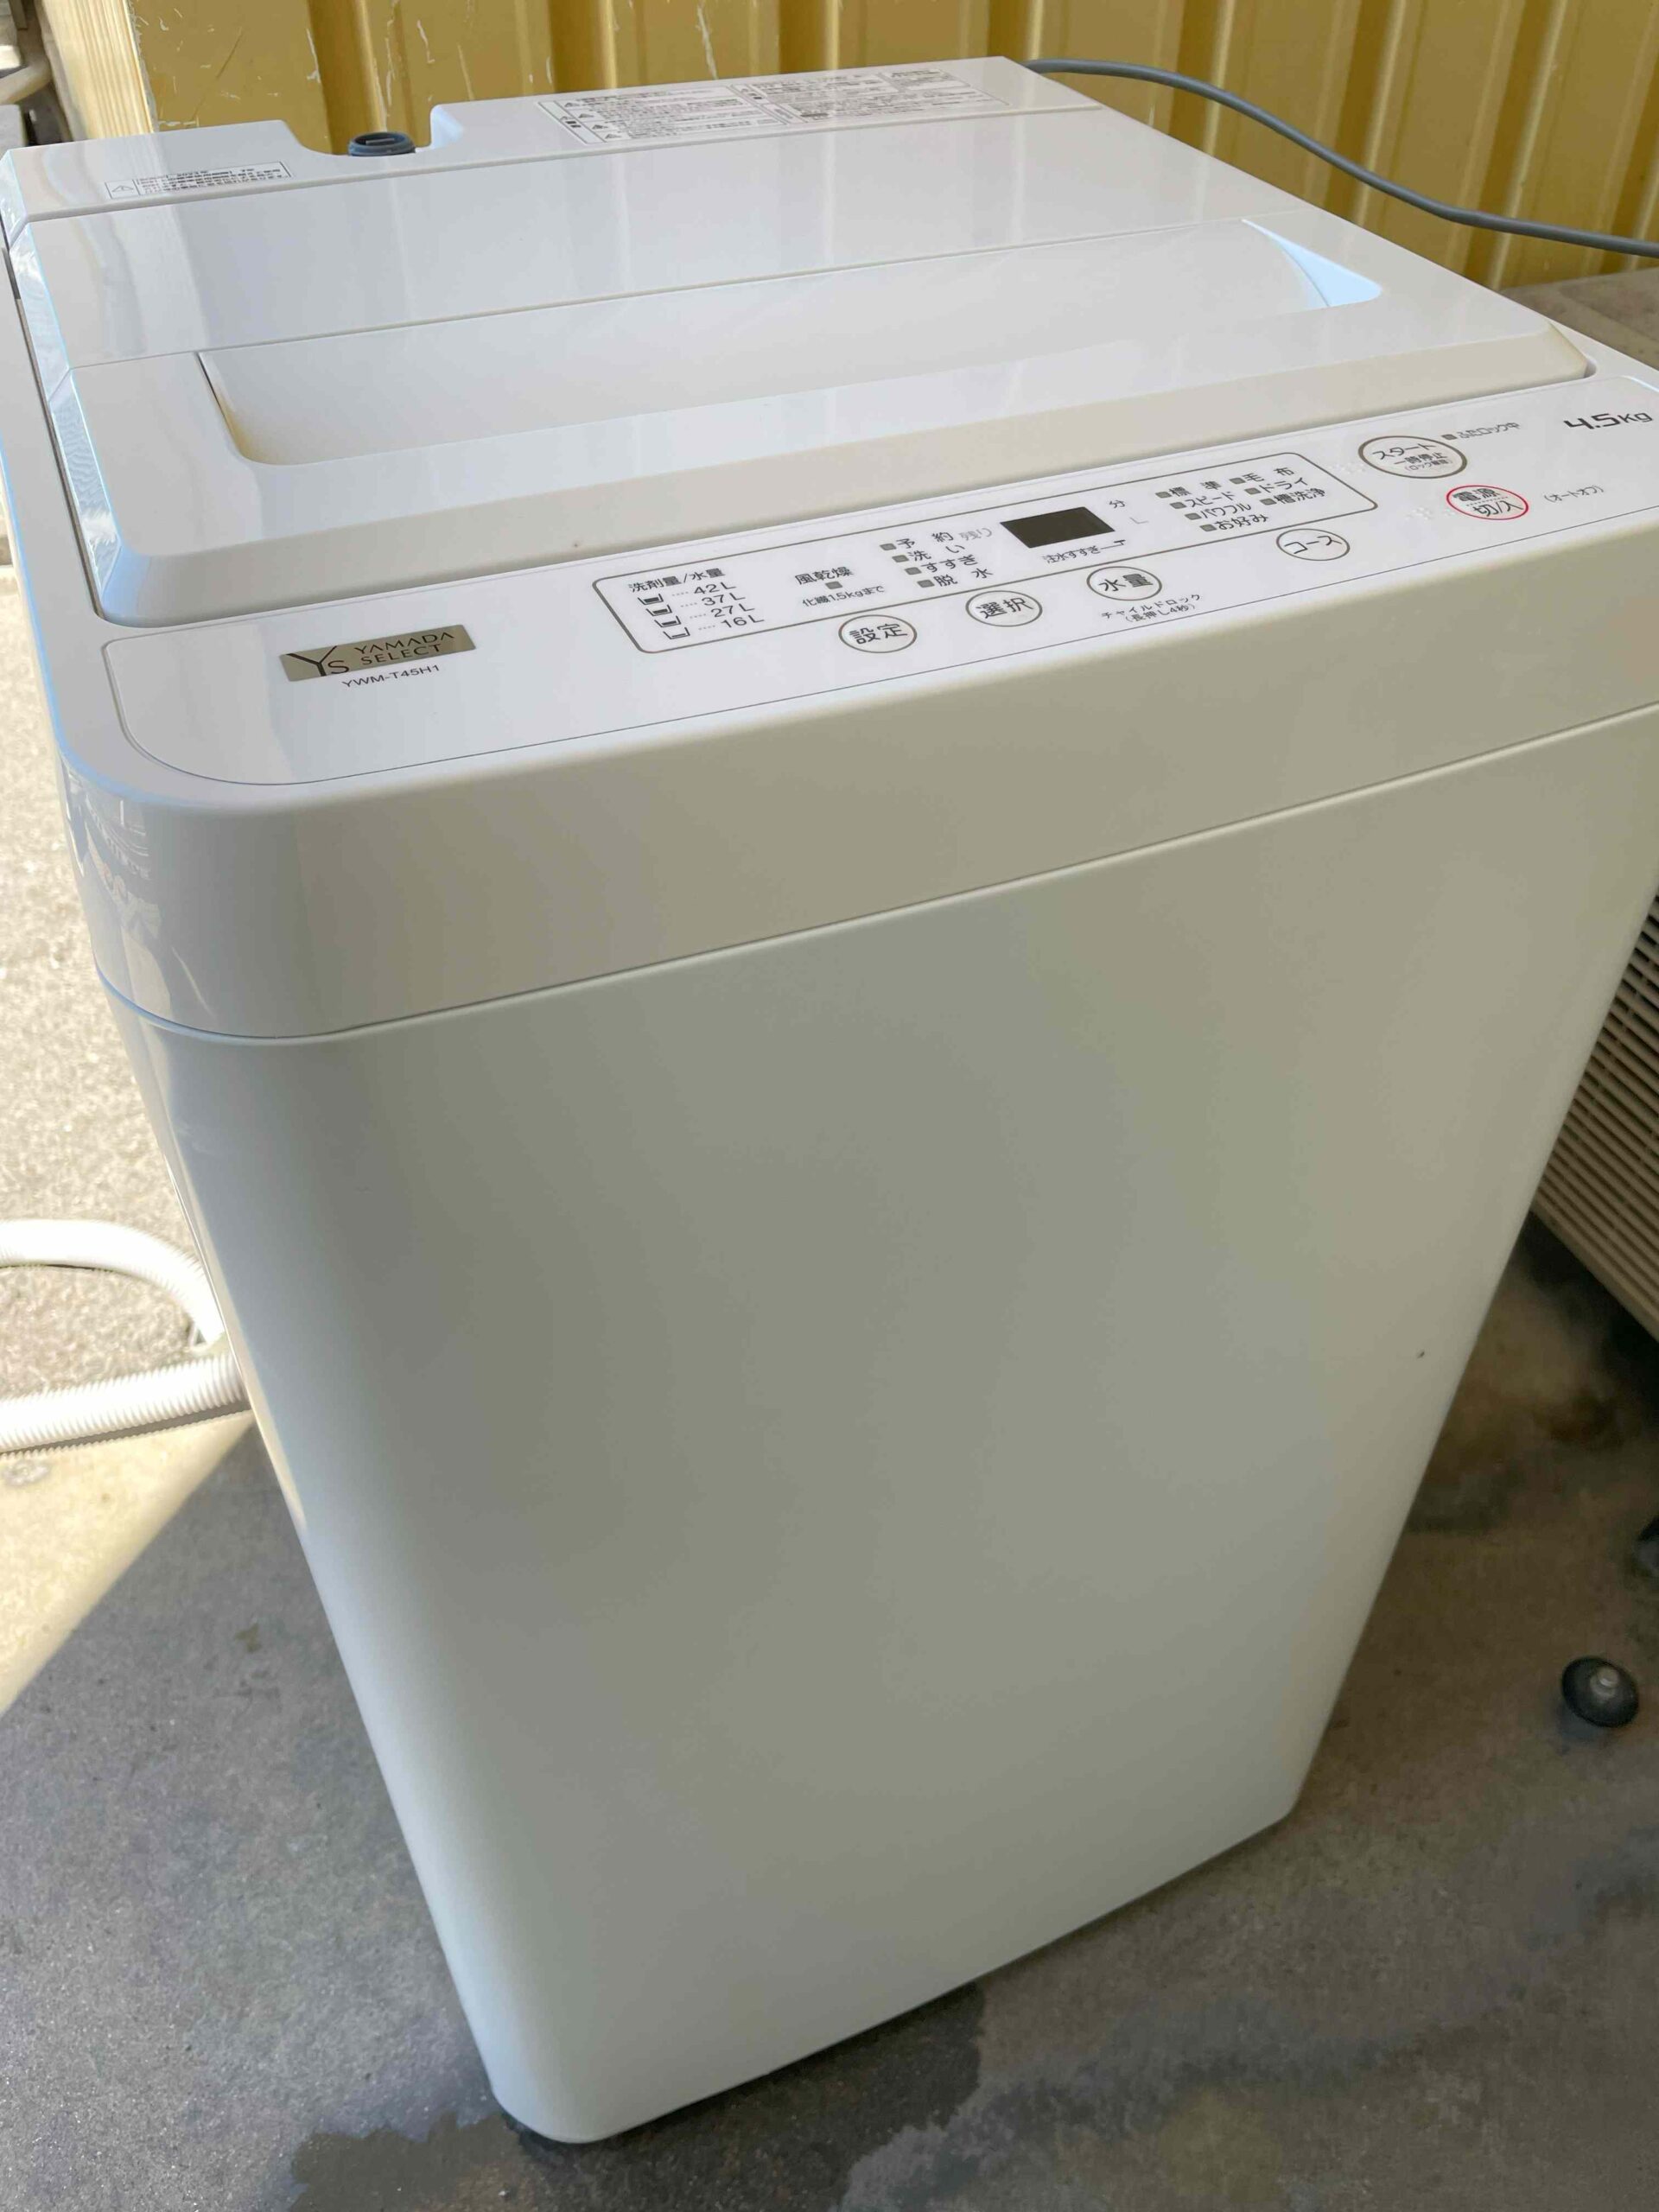 5,460円YAMADASELECT 洗濯機 YWM-T45H1 4.5kg 家電